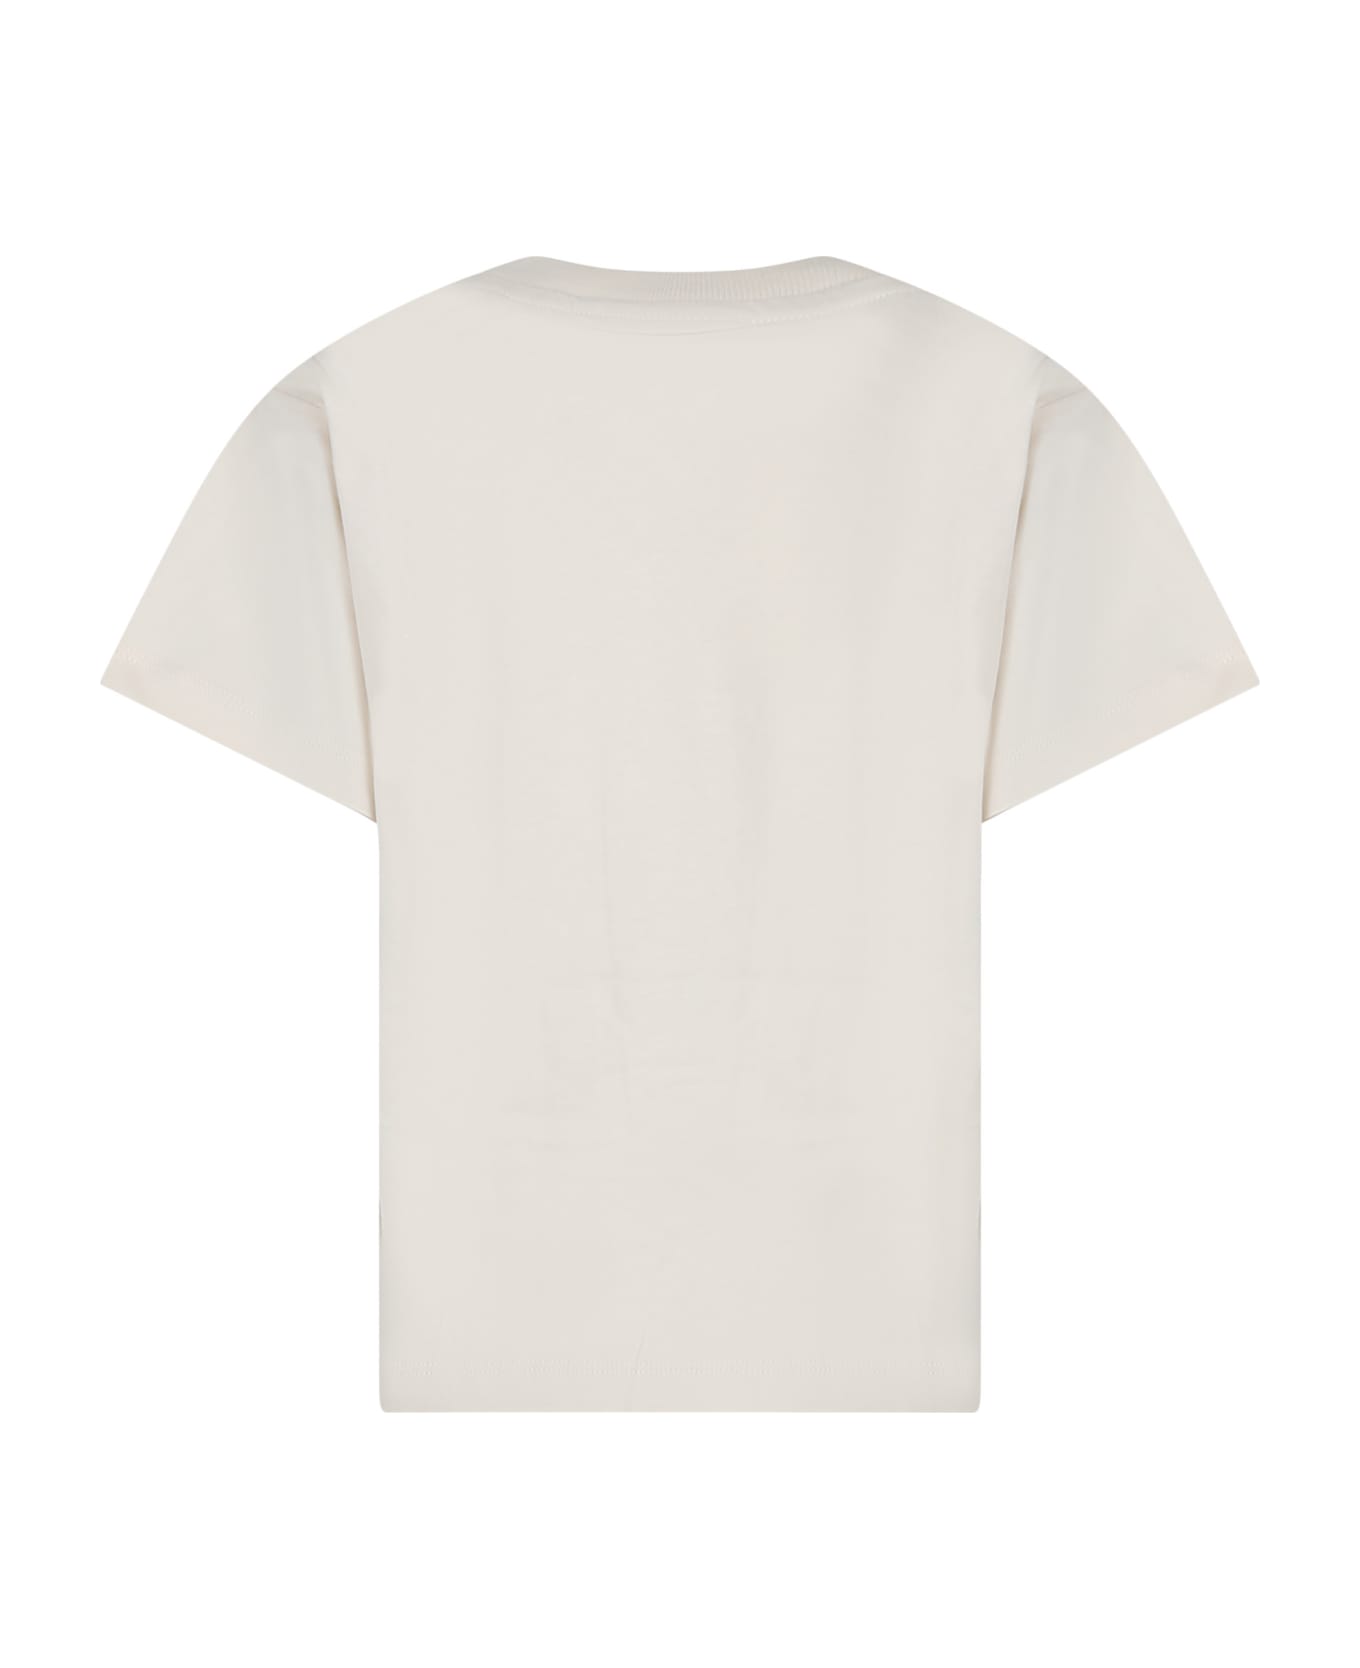 Molo White Riley T-shirt For Boy - White